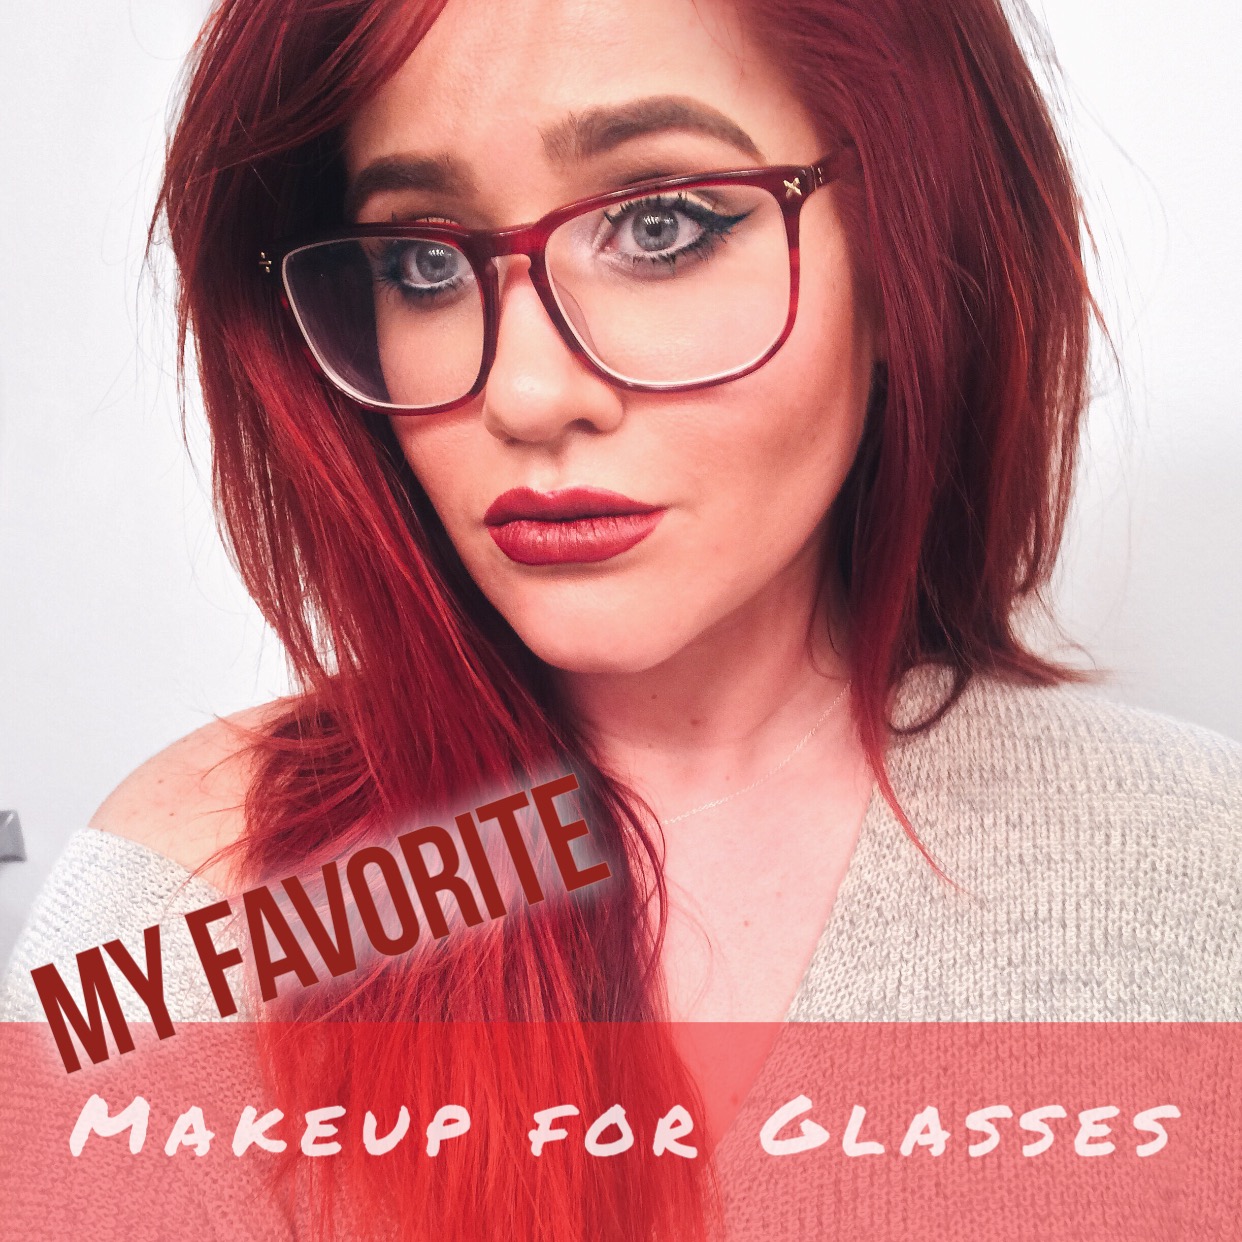 My Favorite Makeup for Glasses